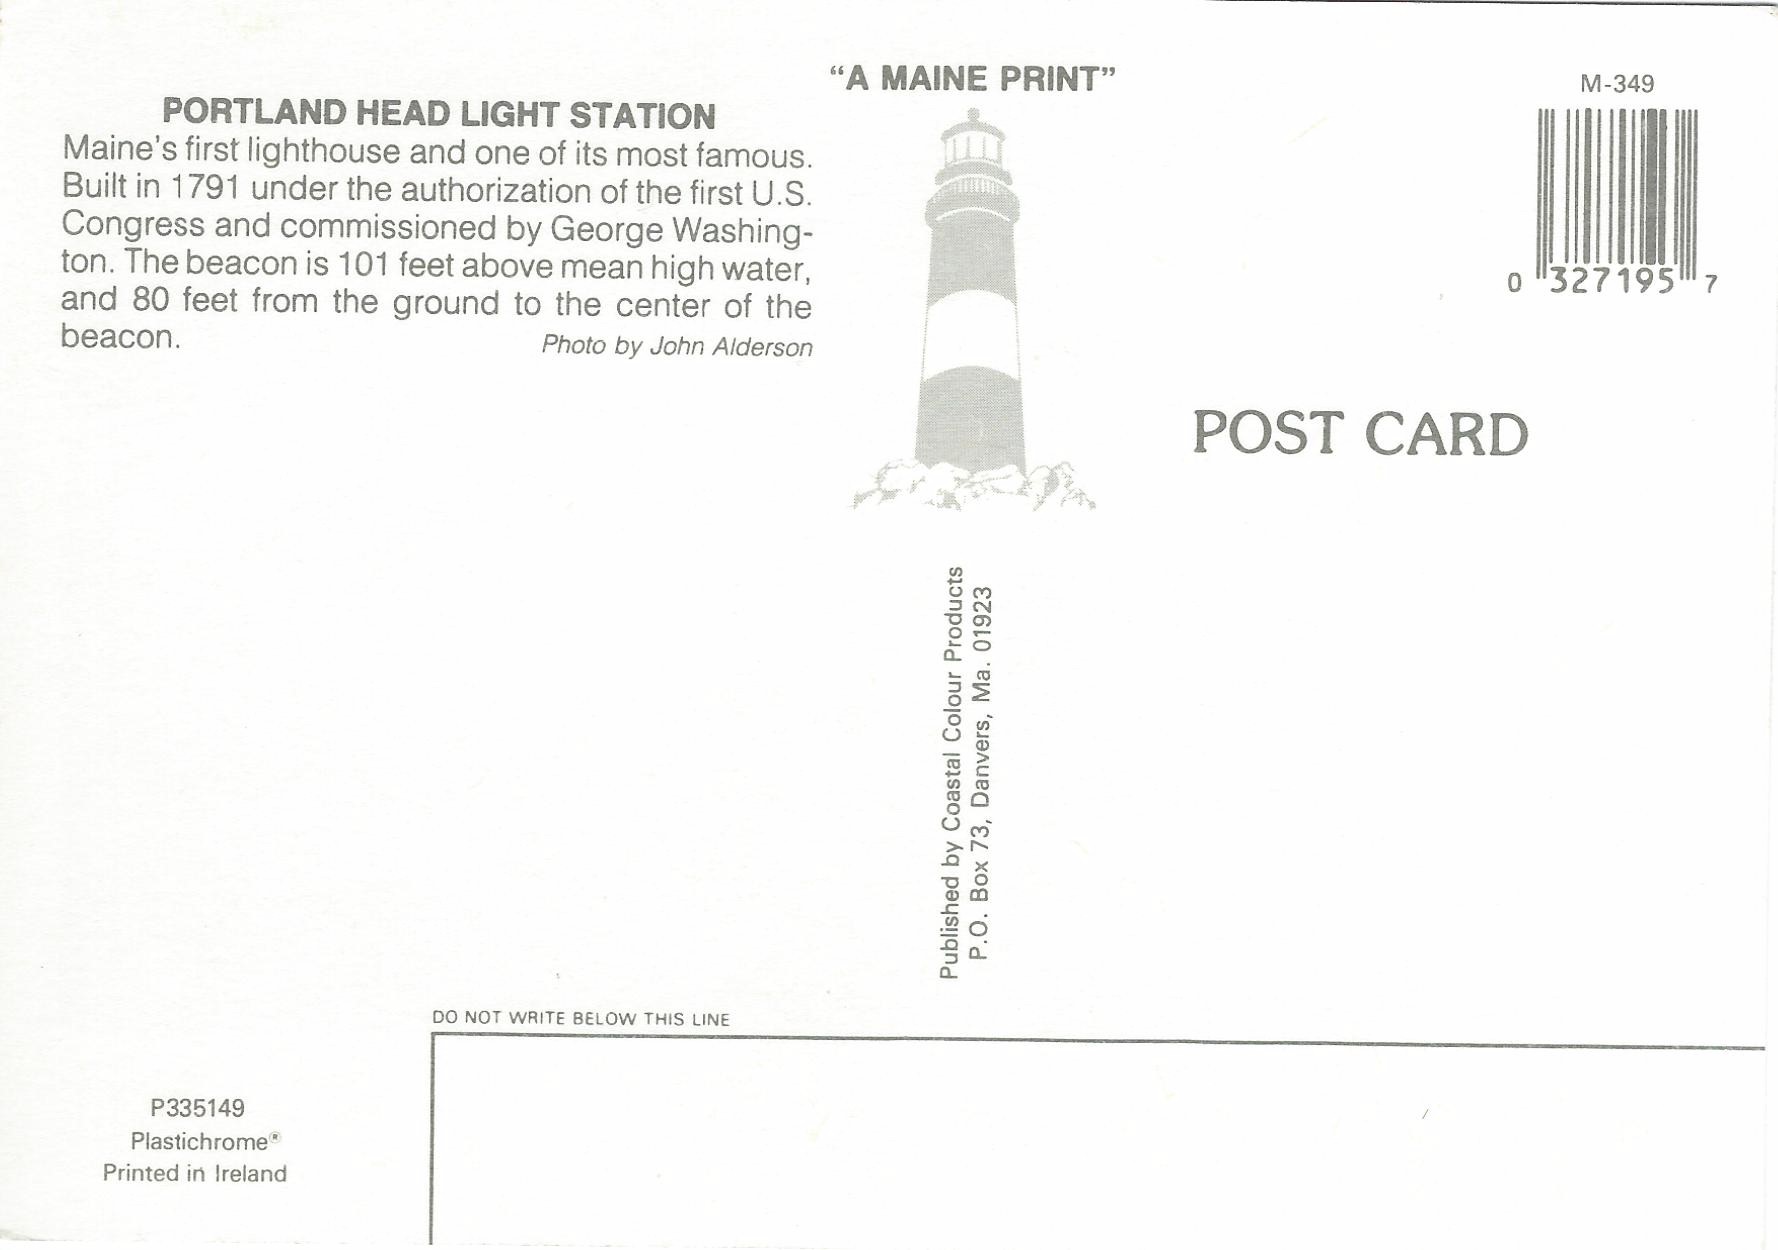 PORTLAND HEAD LIGHT STATION LIGHTHOUSE MAINE POSTCARD P335149 M-